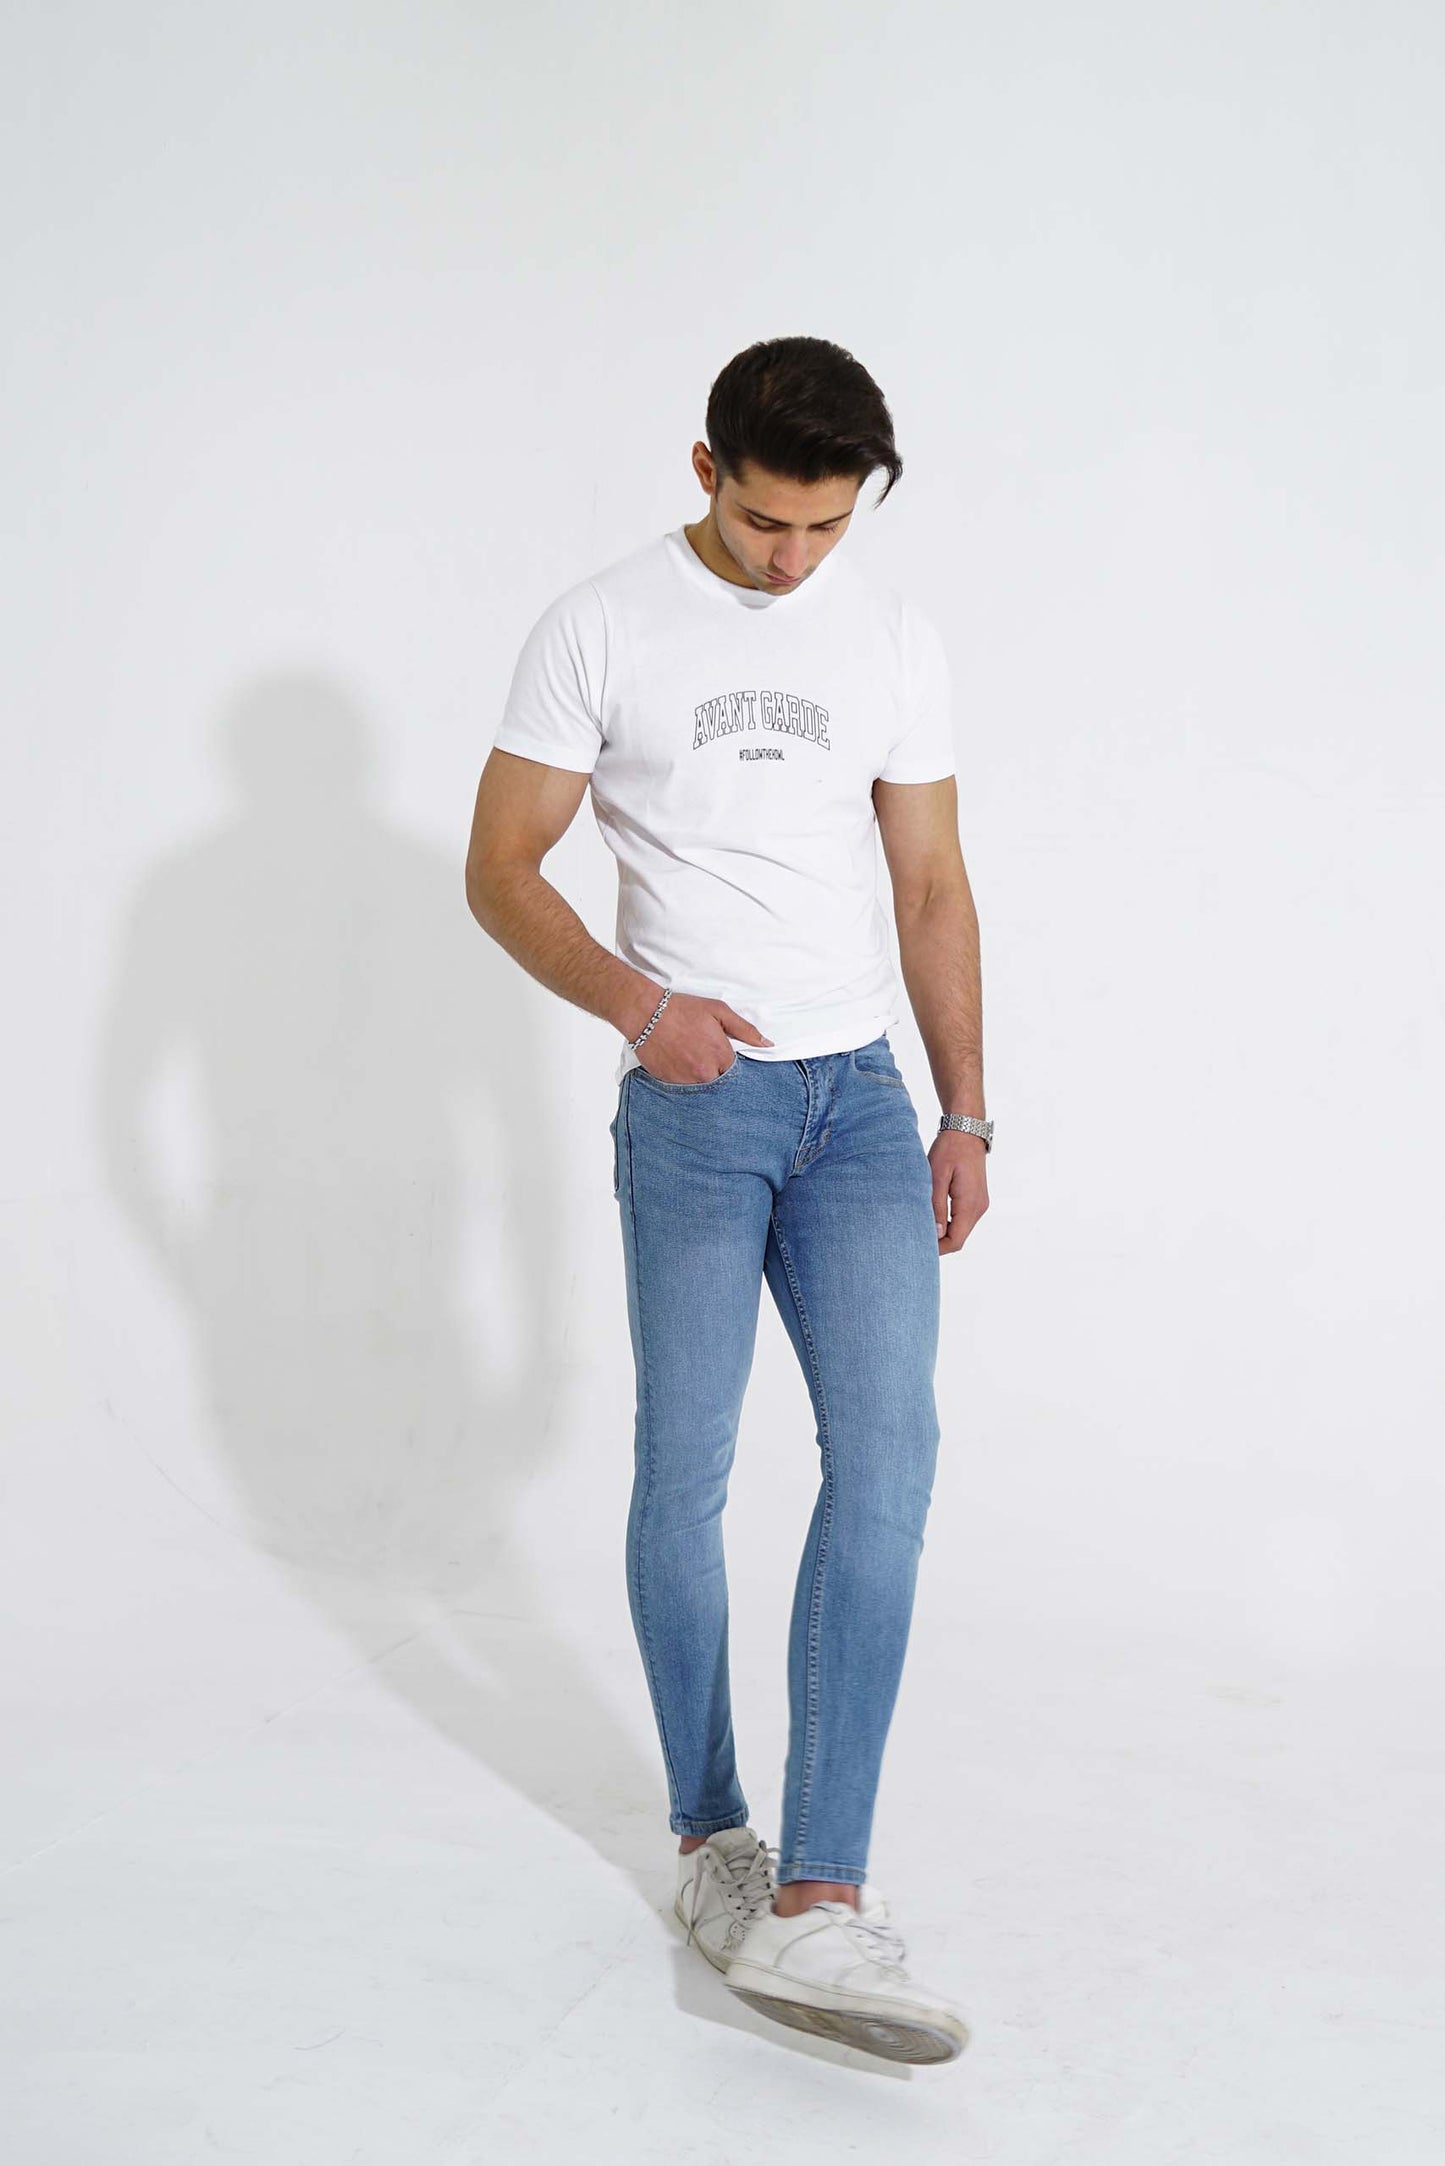 Blue Jeans - Skinny Fit (JN053)